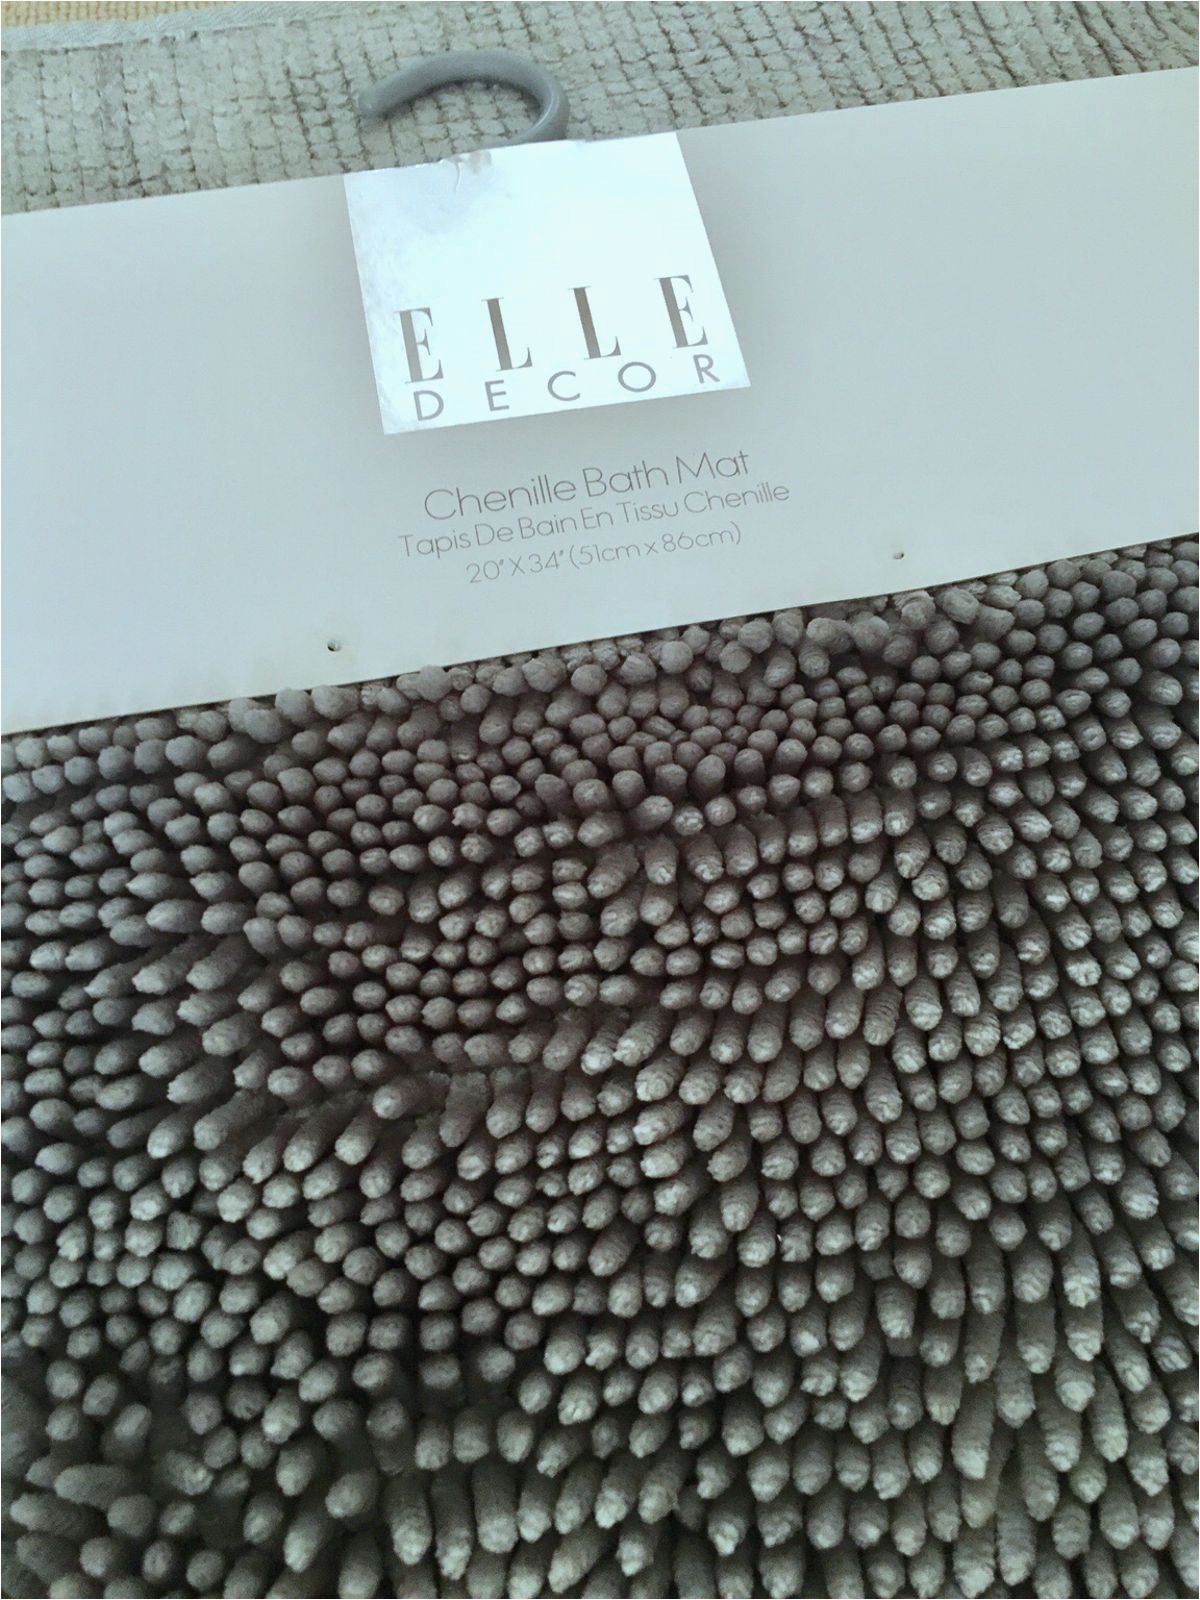 Elle Decor Bathroom Rugs New Elle Decor Luxury Chenille Bath Mat In En5 London for